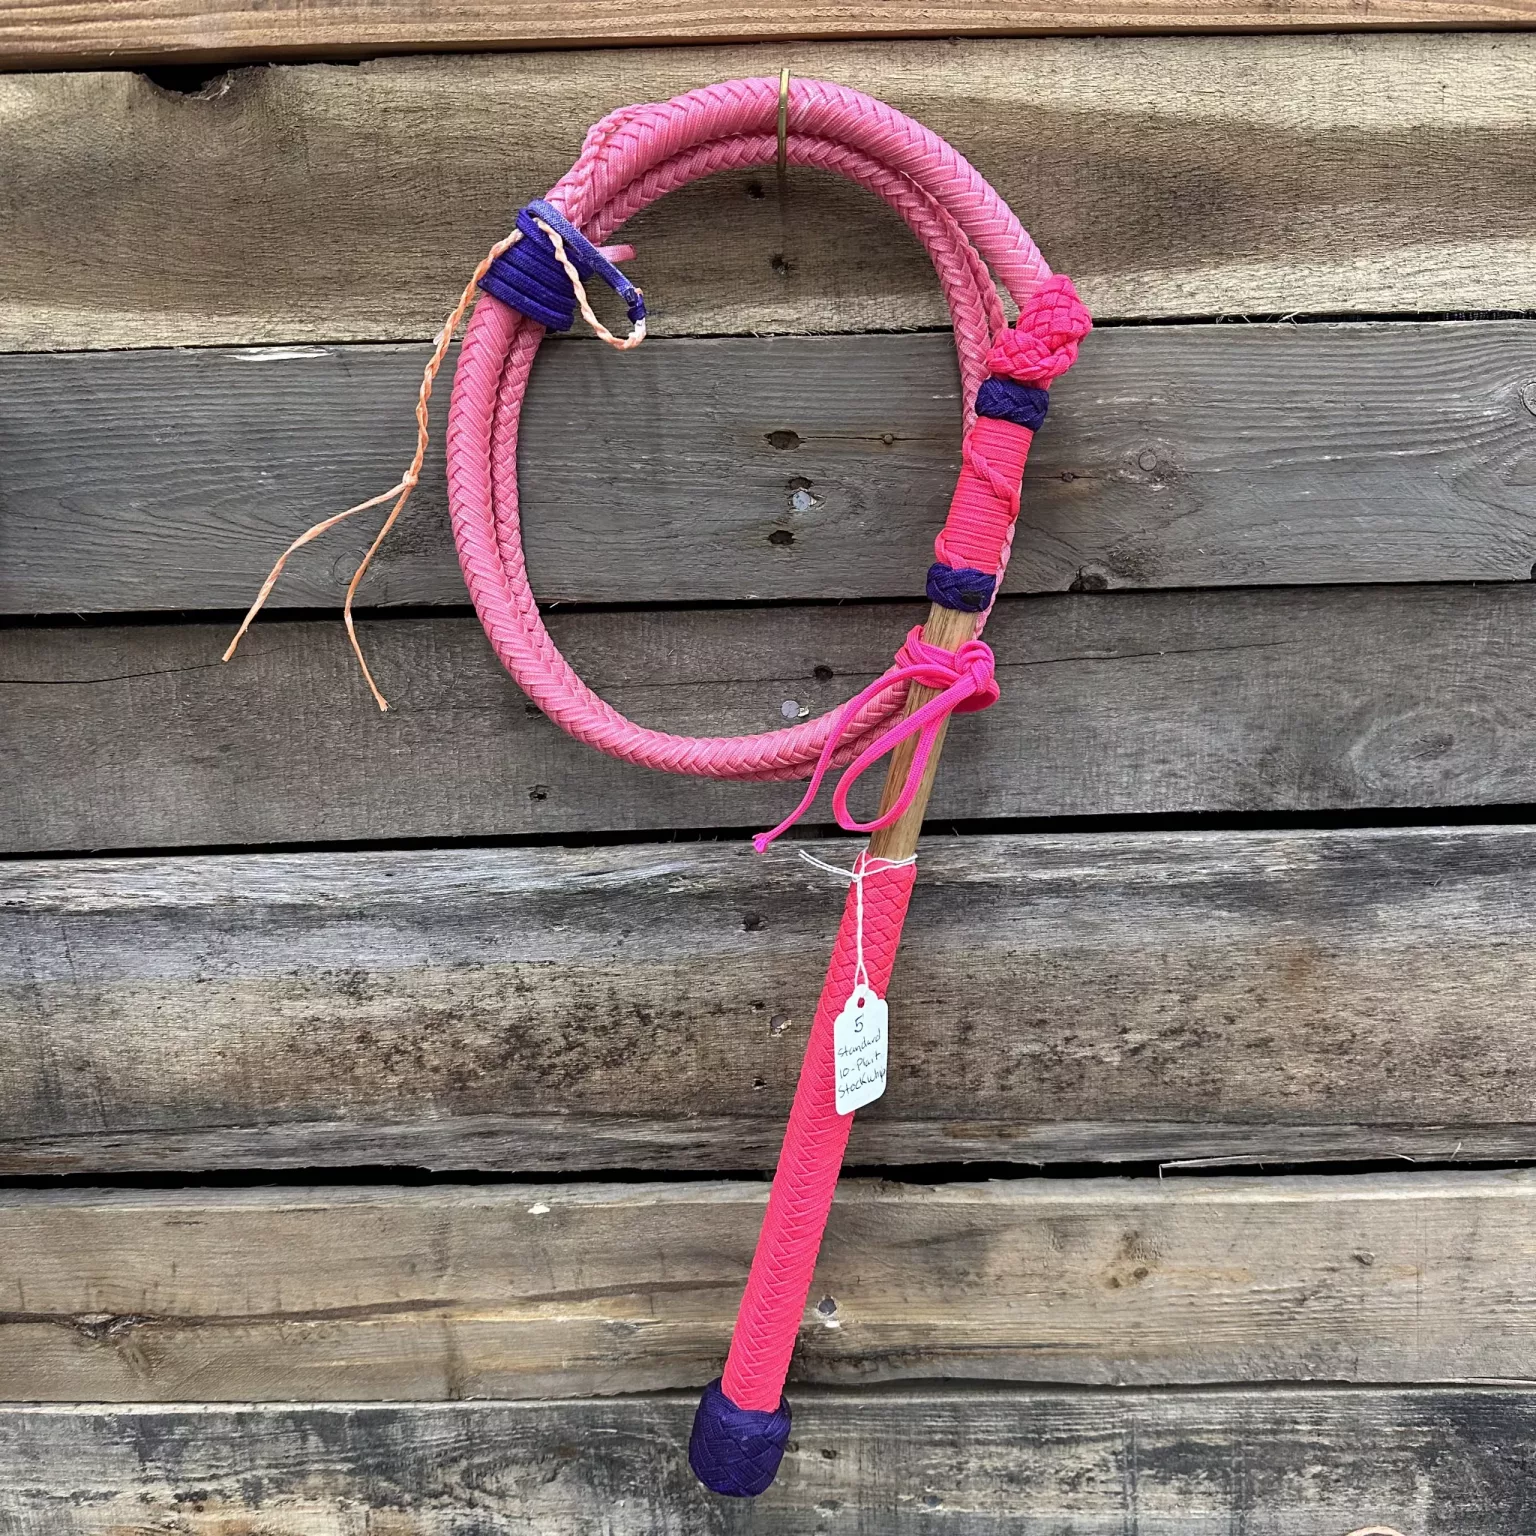 5 foot pink standard nylon stock whip on display